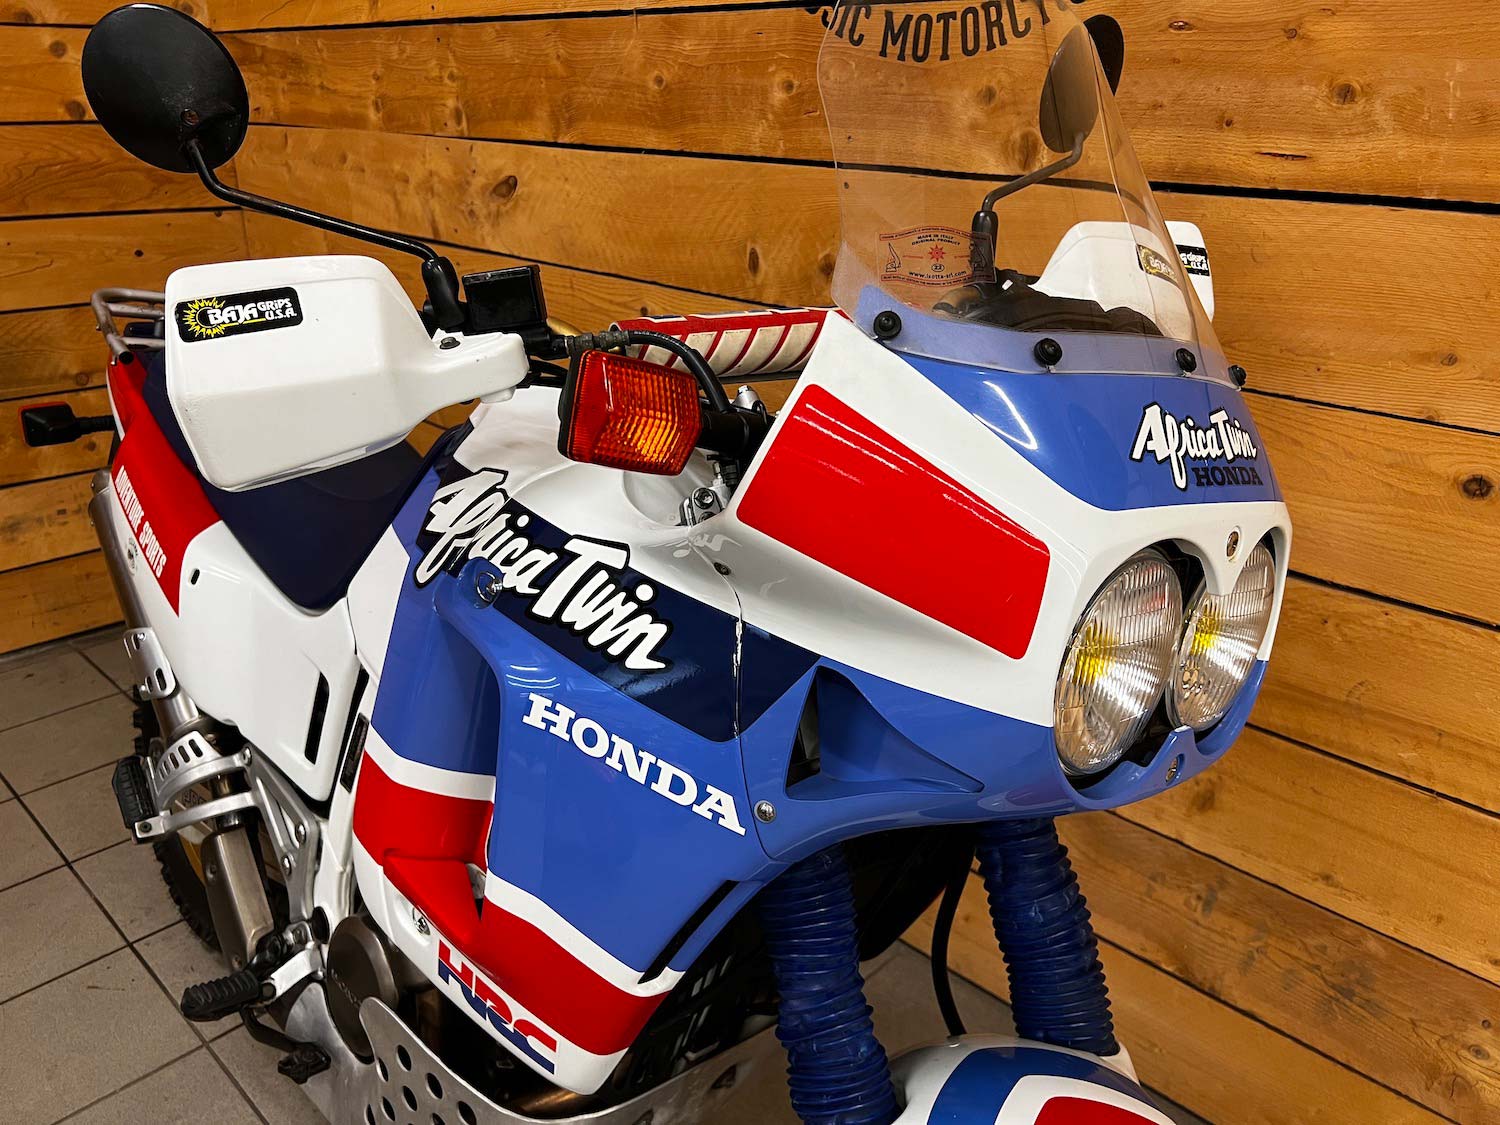 Honda_Africa_Twin_Cezanne_classic_motorcycle_11-153.jpg